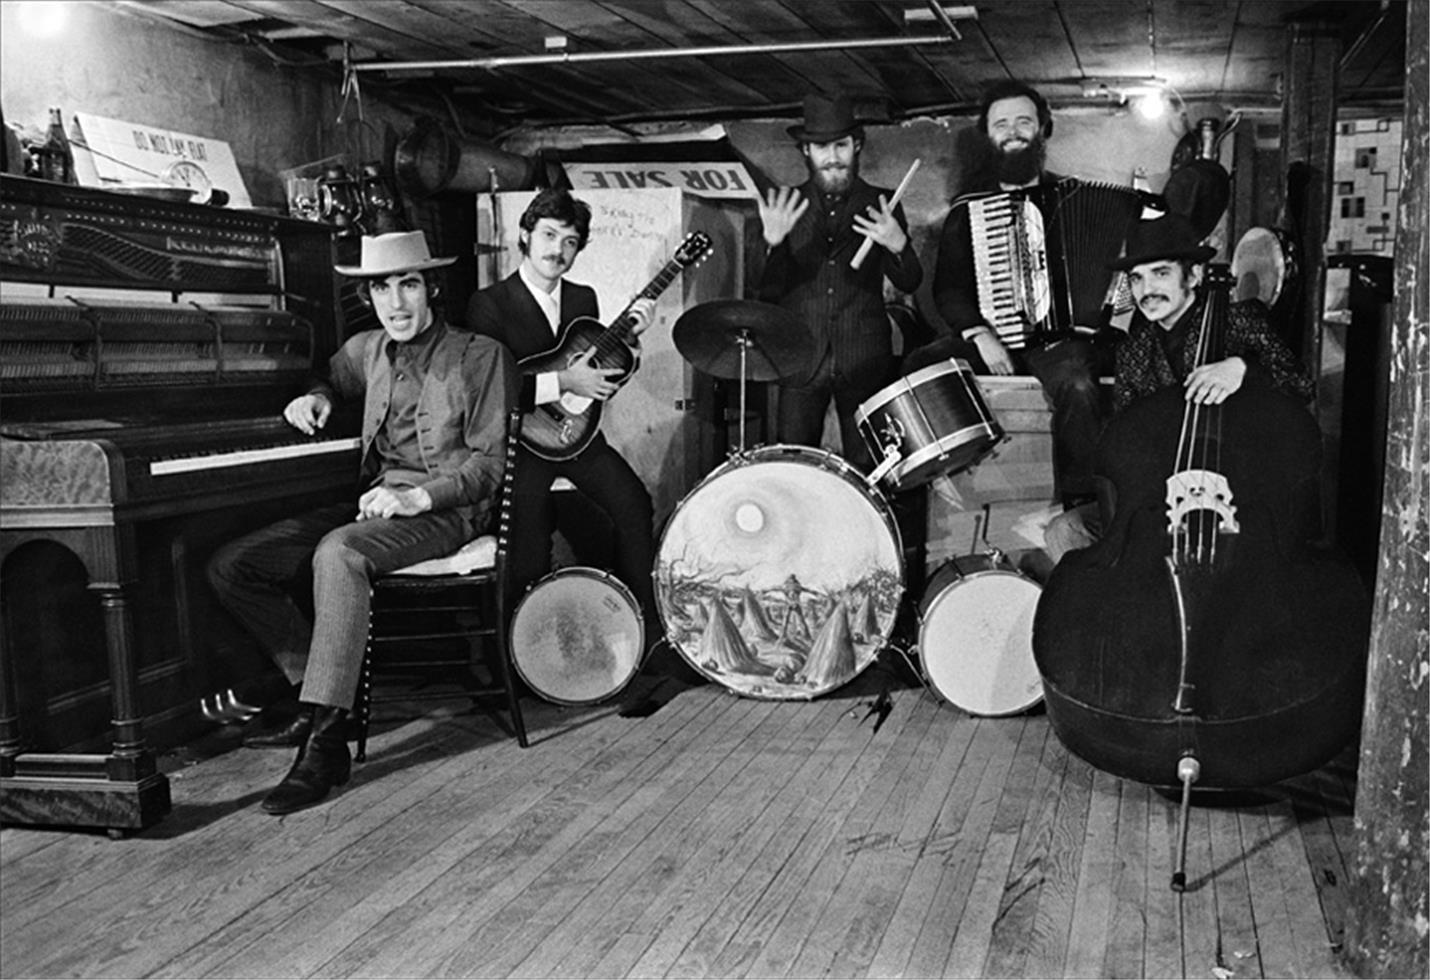 Elliott Landy Black and White Photograph - The Band, in the basement of Rick Danko’s Zena Rd. home, Woodstock, 1969